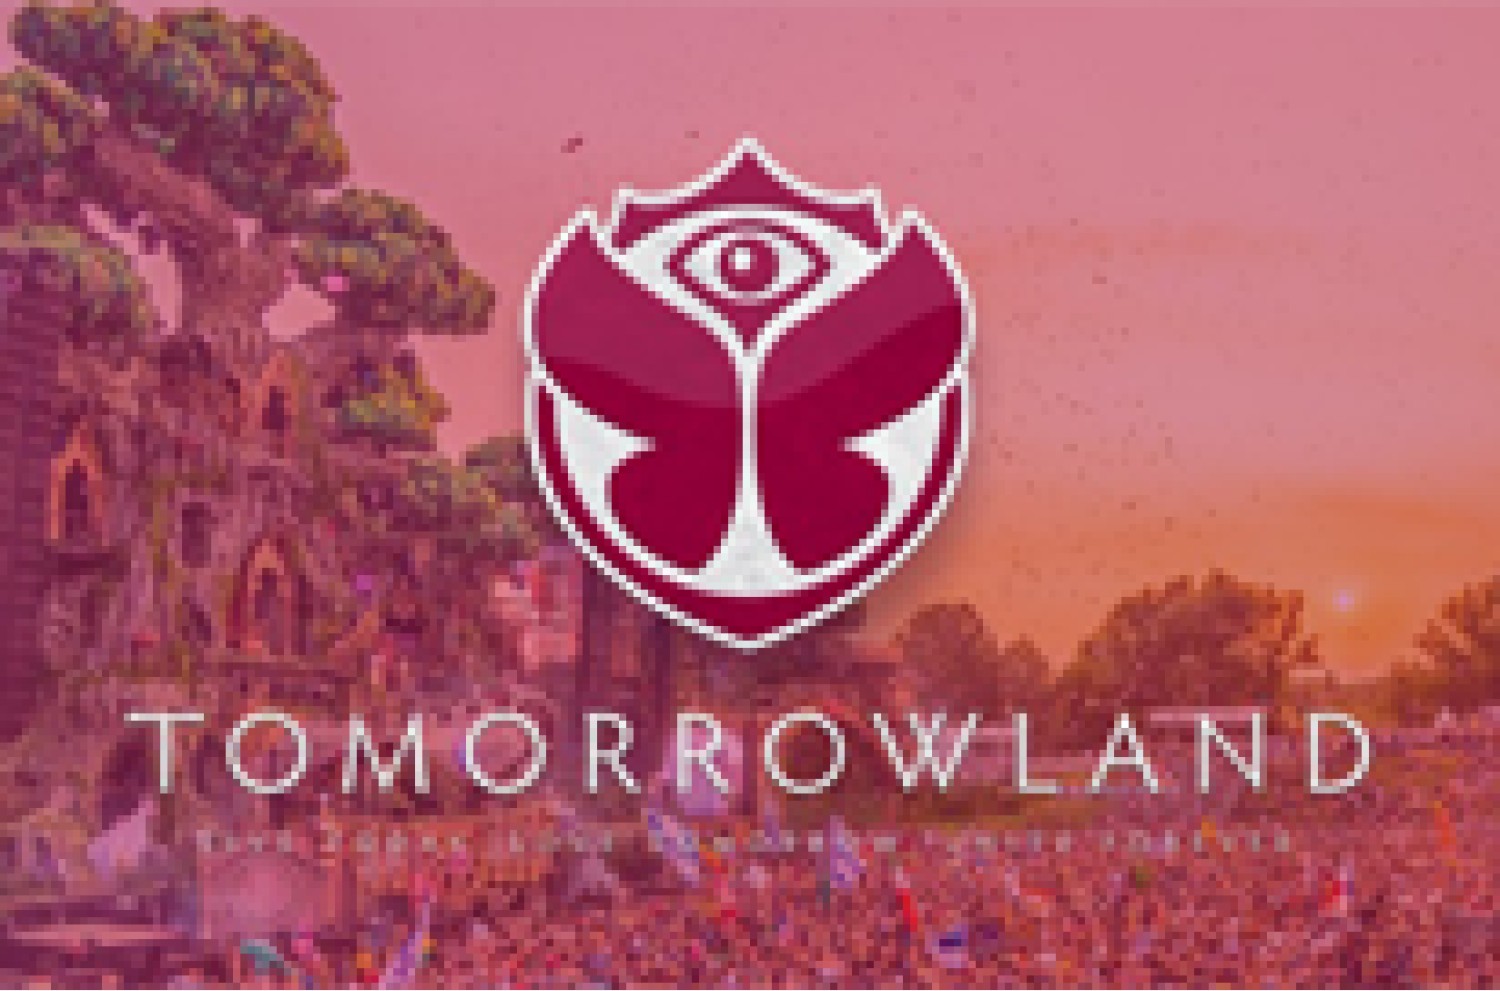 Party nieuws: Al 35 mensen toegang geweigerd voor Tomorrowland 2017